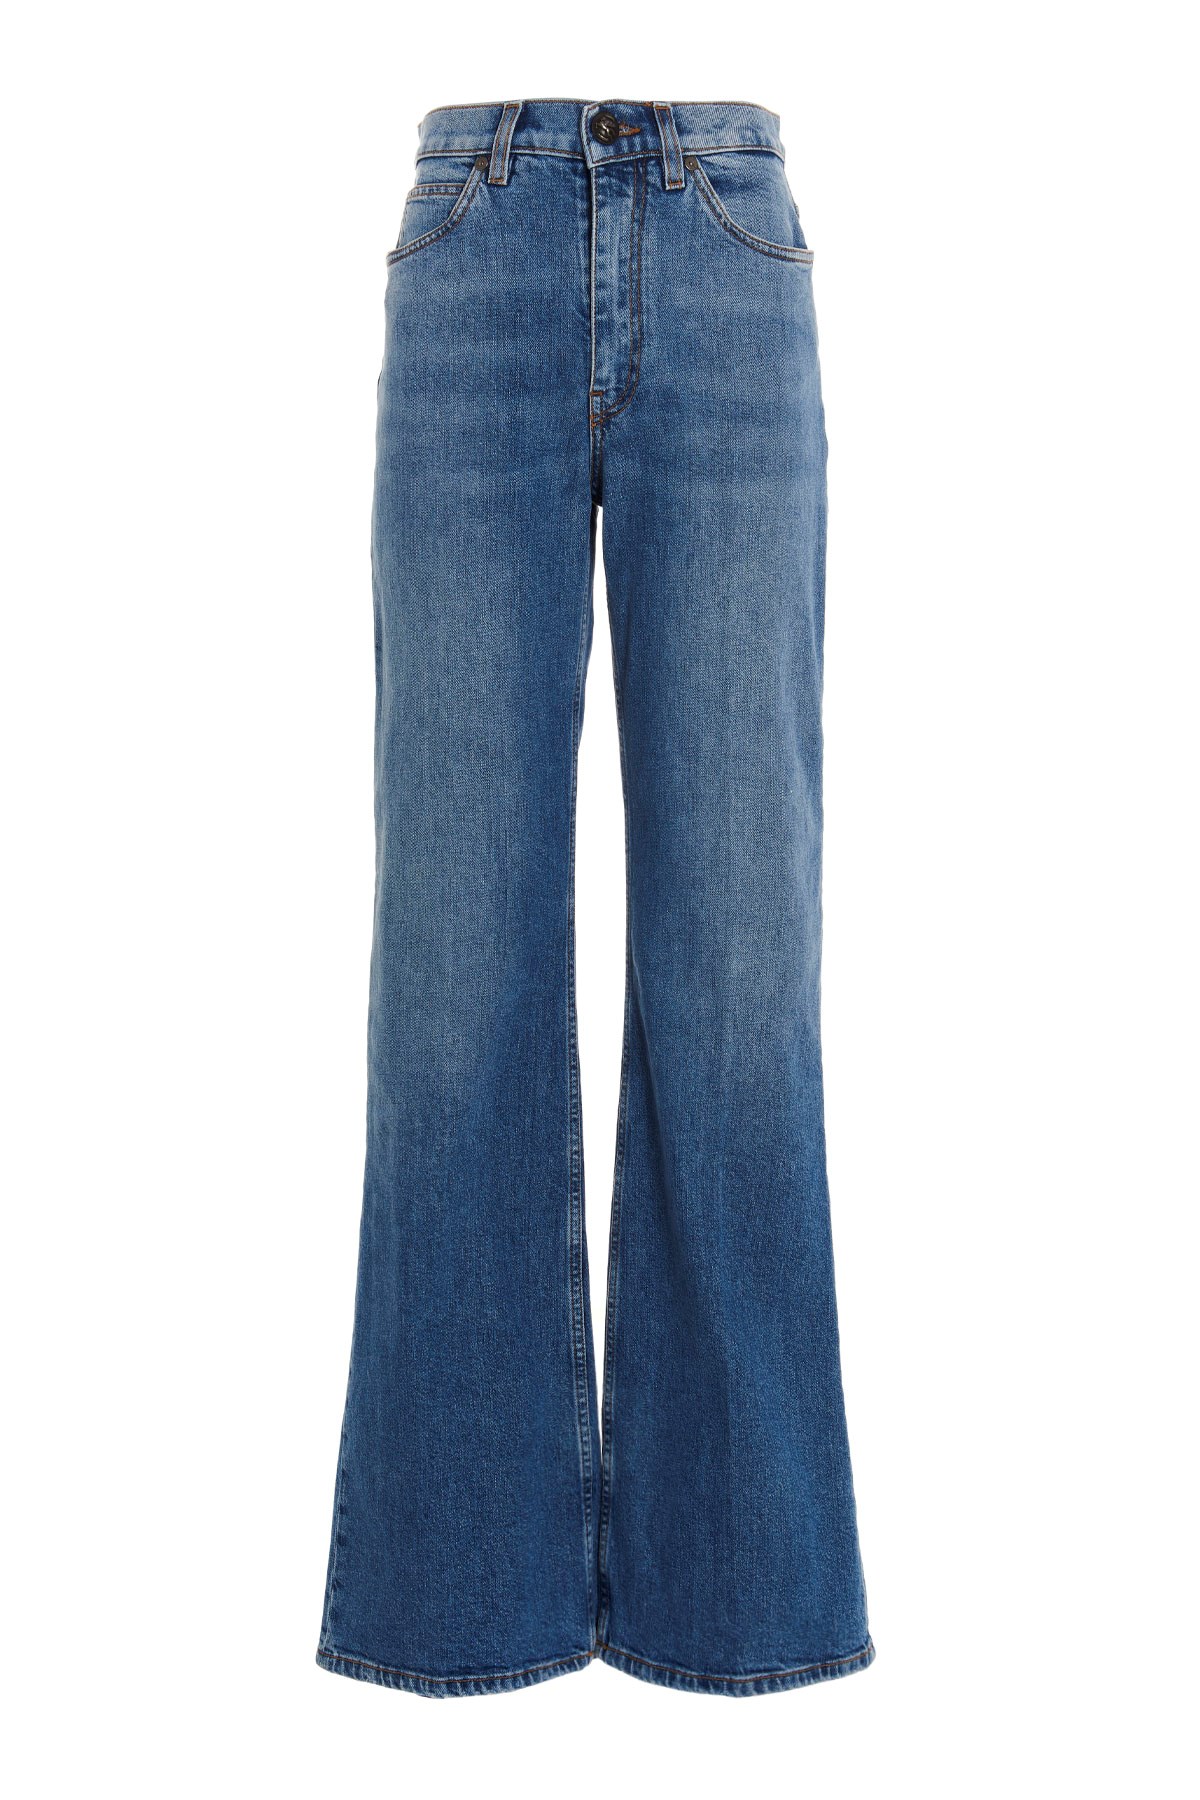 ETRO 'Violetta’ Jeans